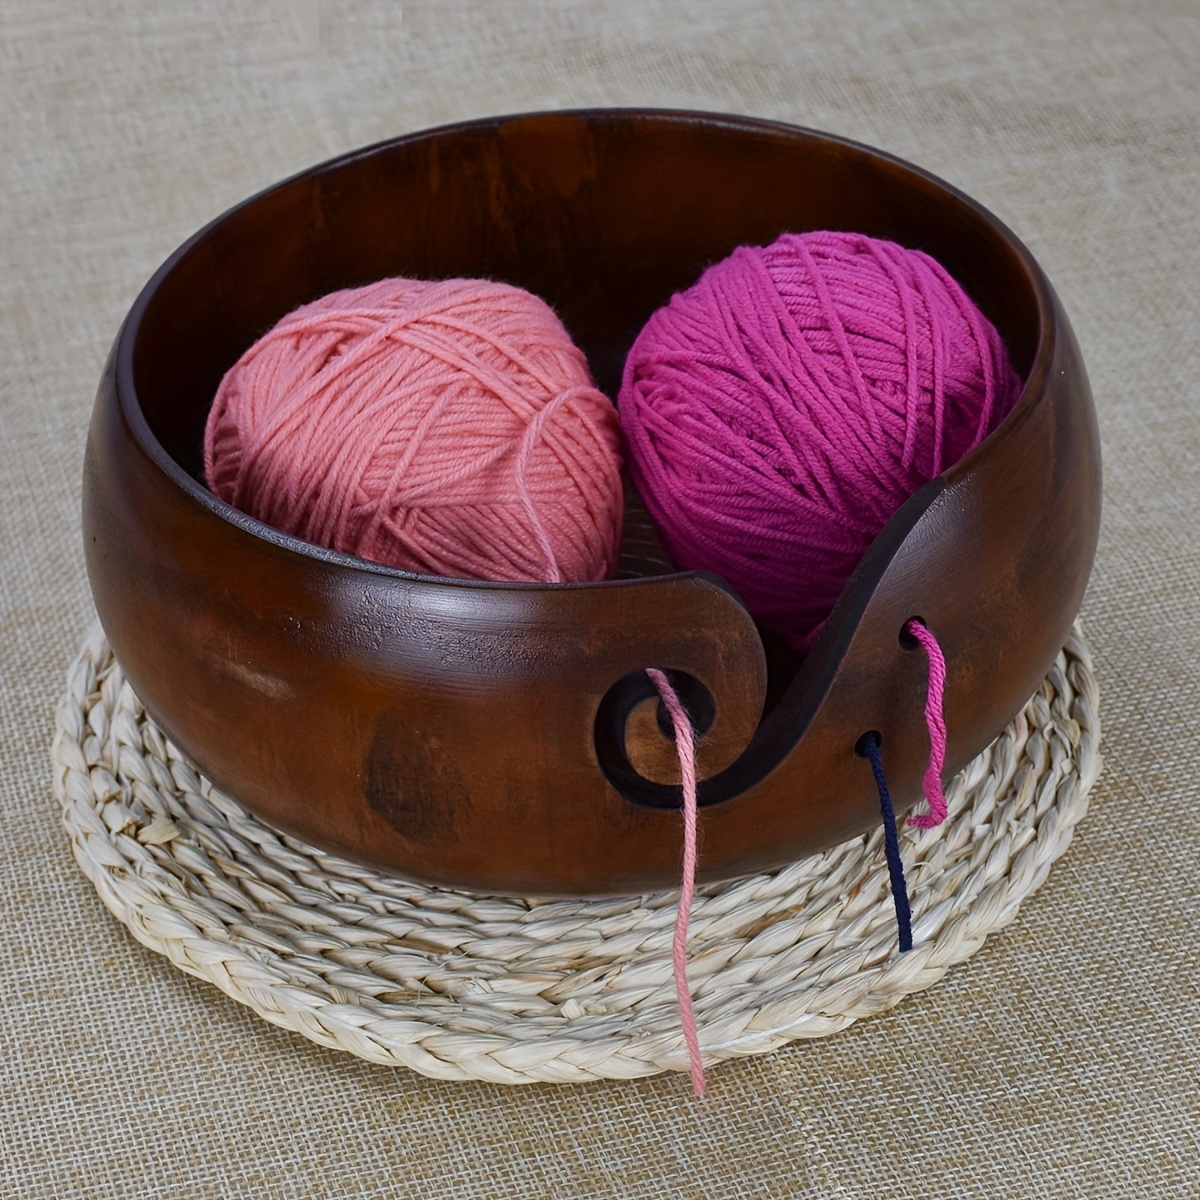 Wood Yarn Bowl Crochet Bowl Wood Knitting Bowl Yarn Holder Large